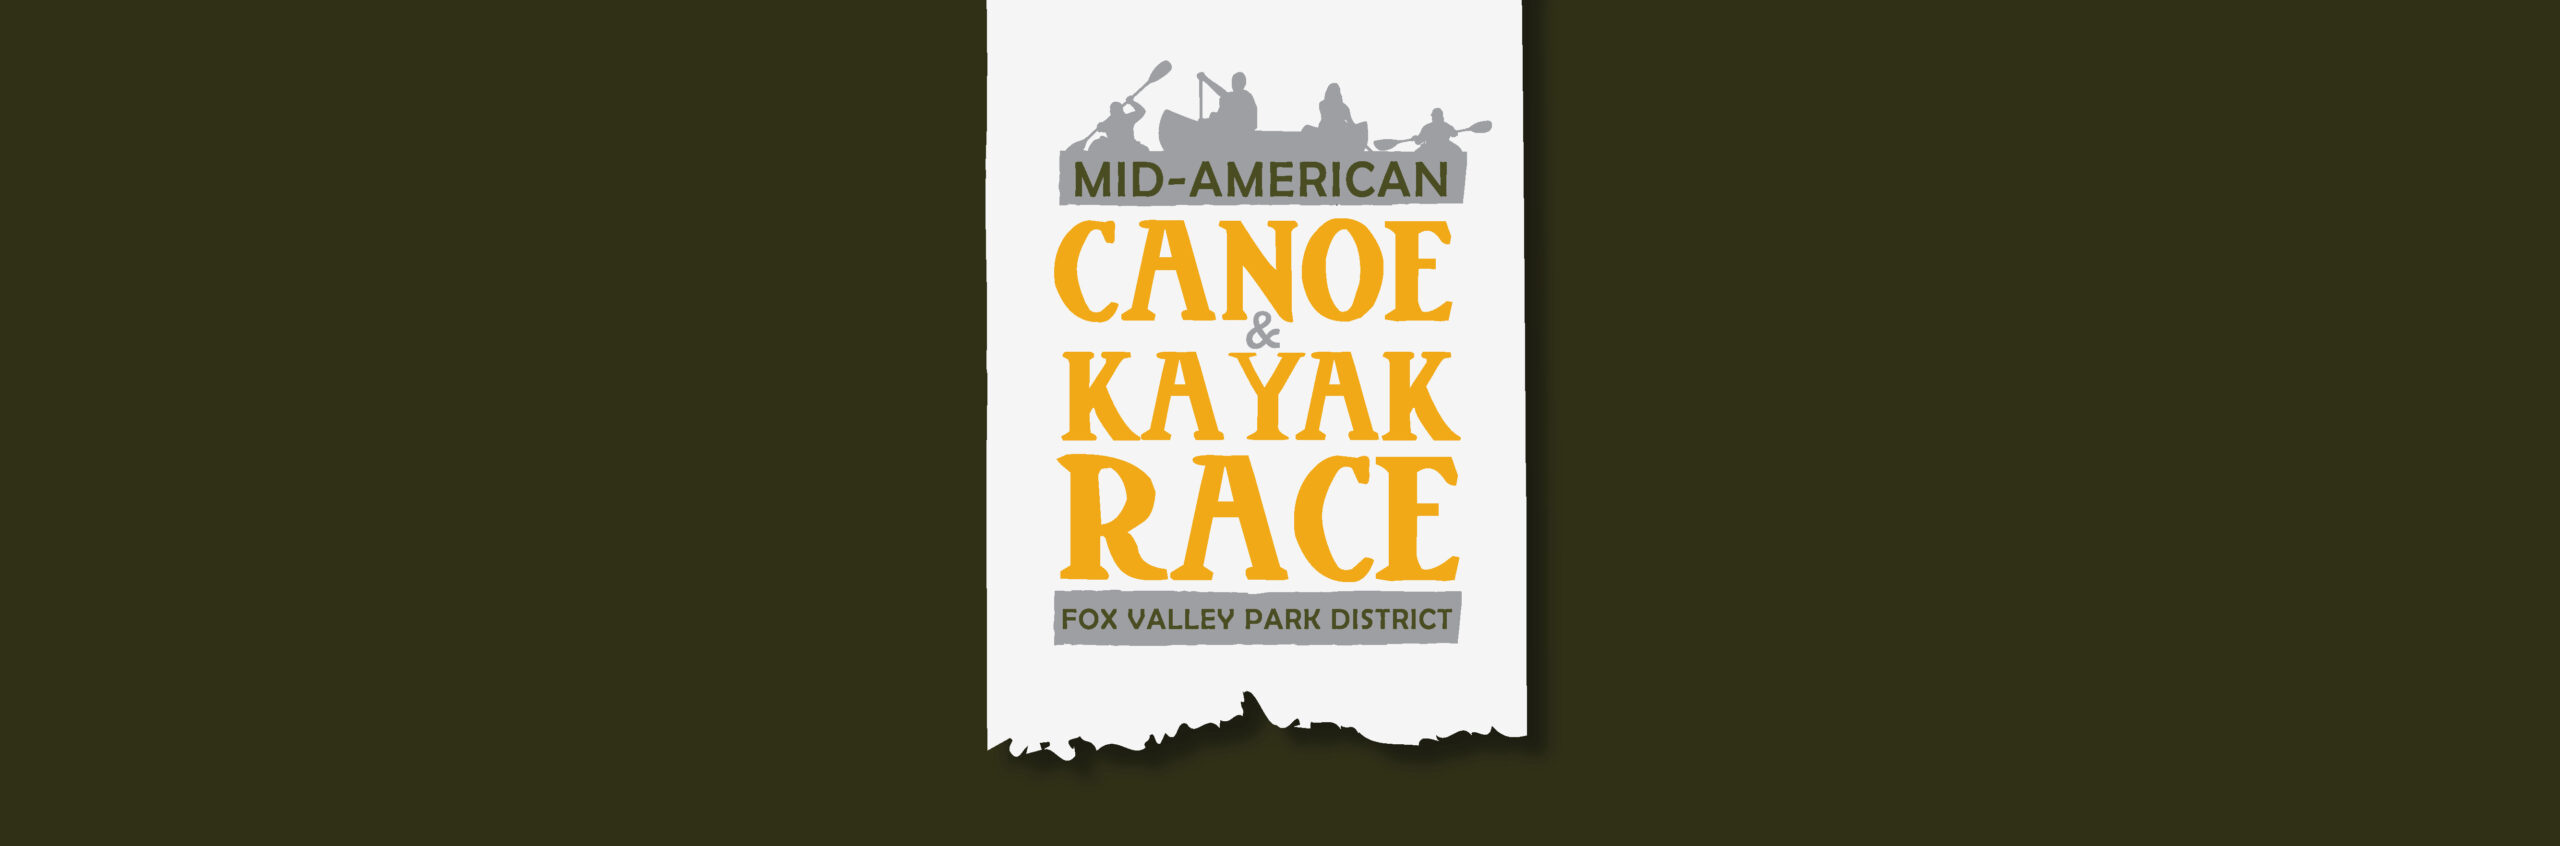 Mid-American Canoe & Kayak Race